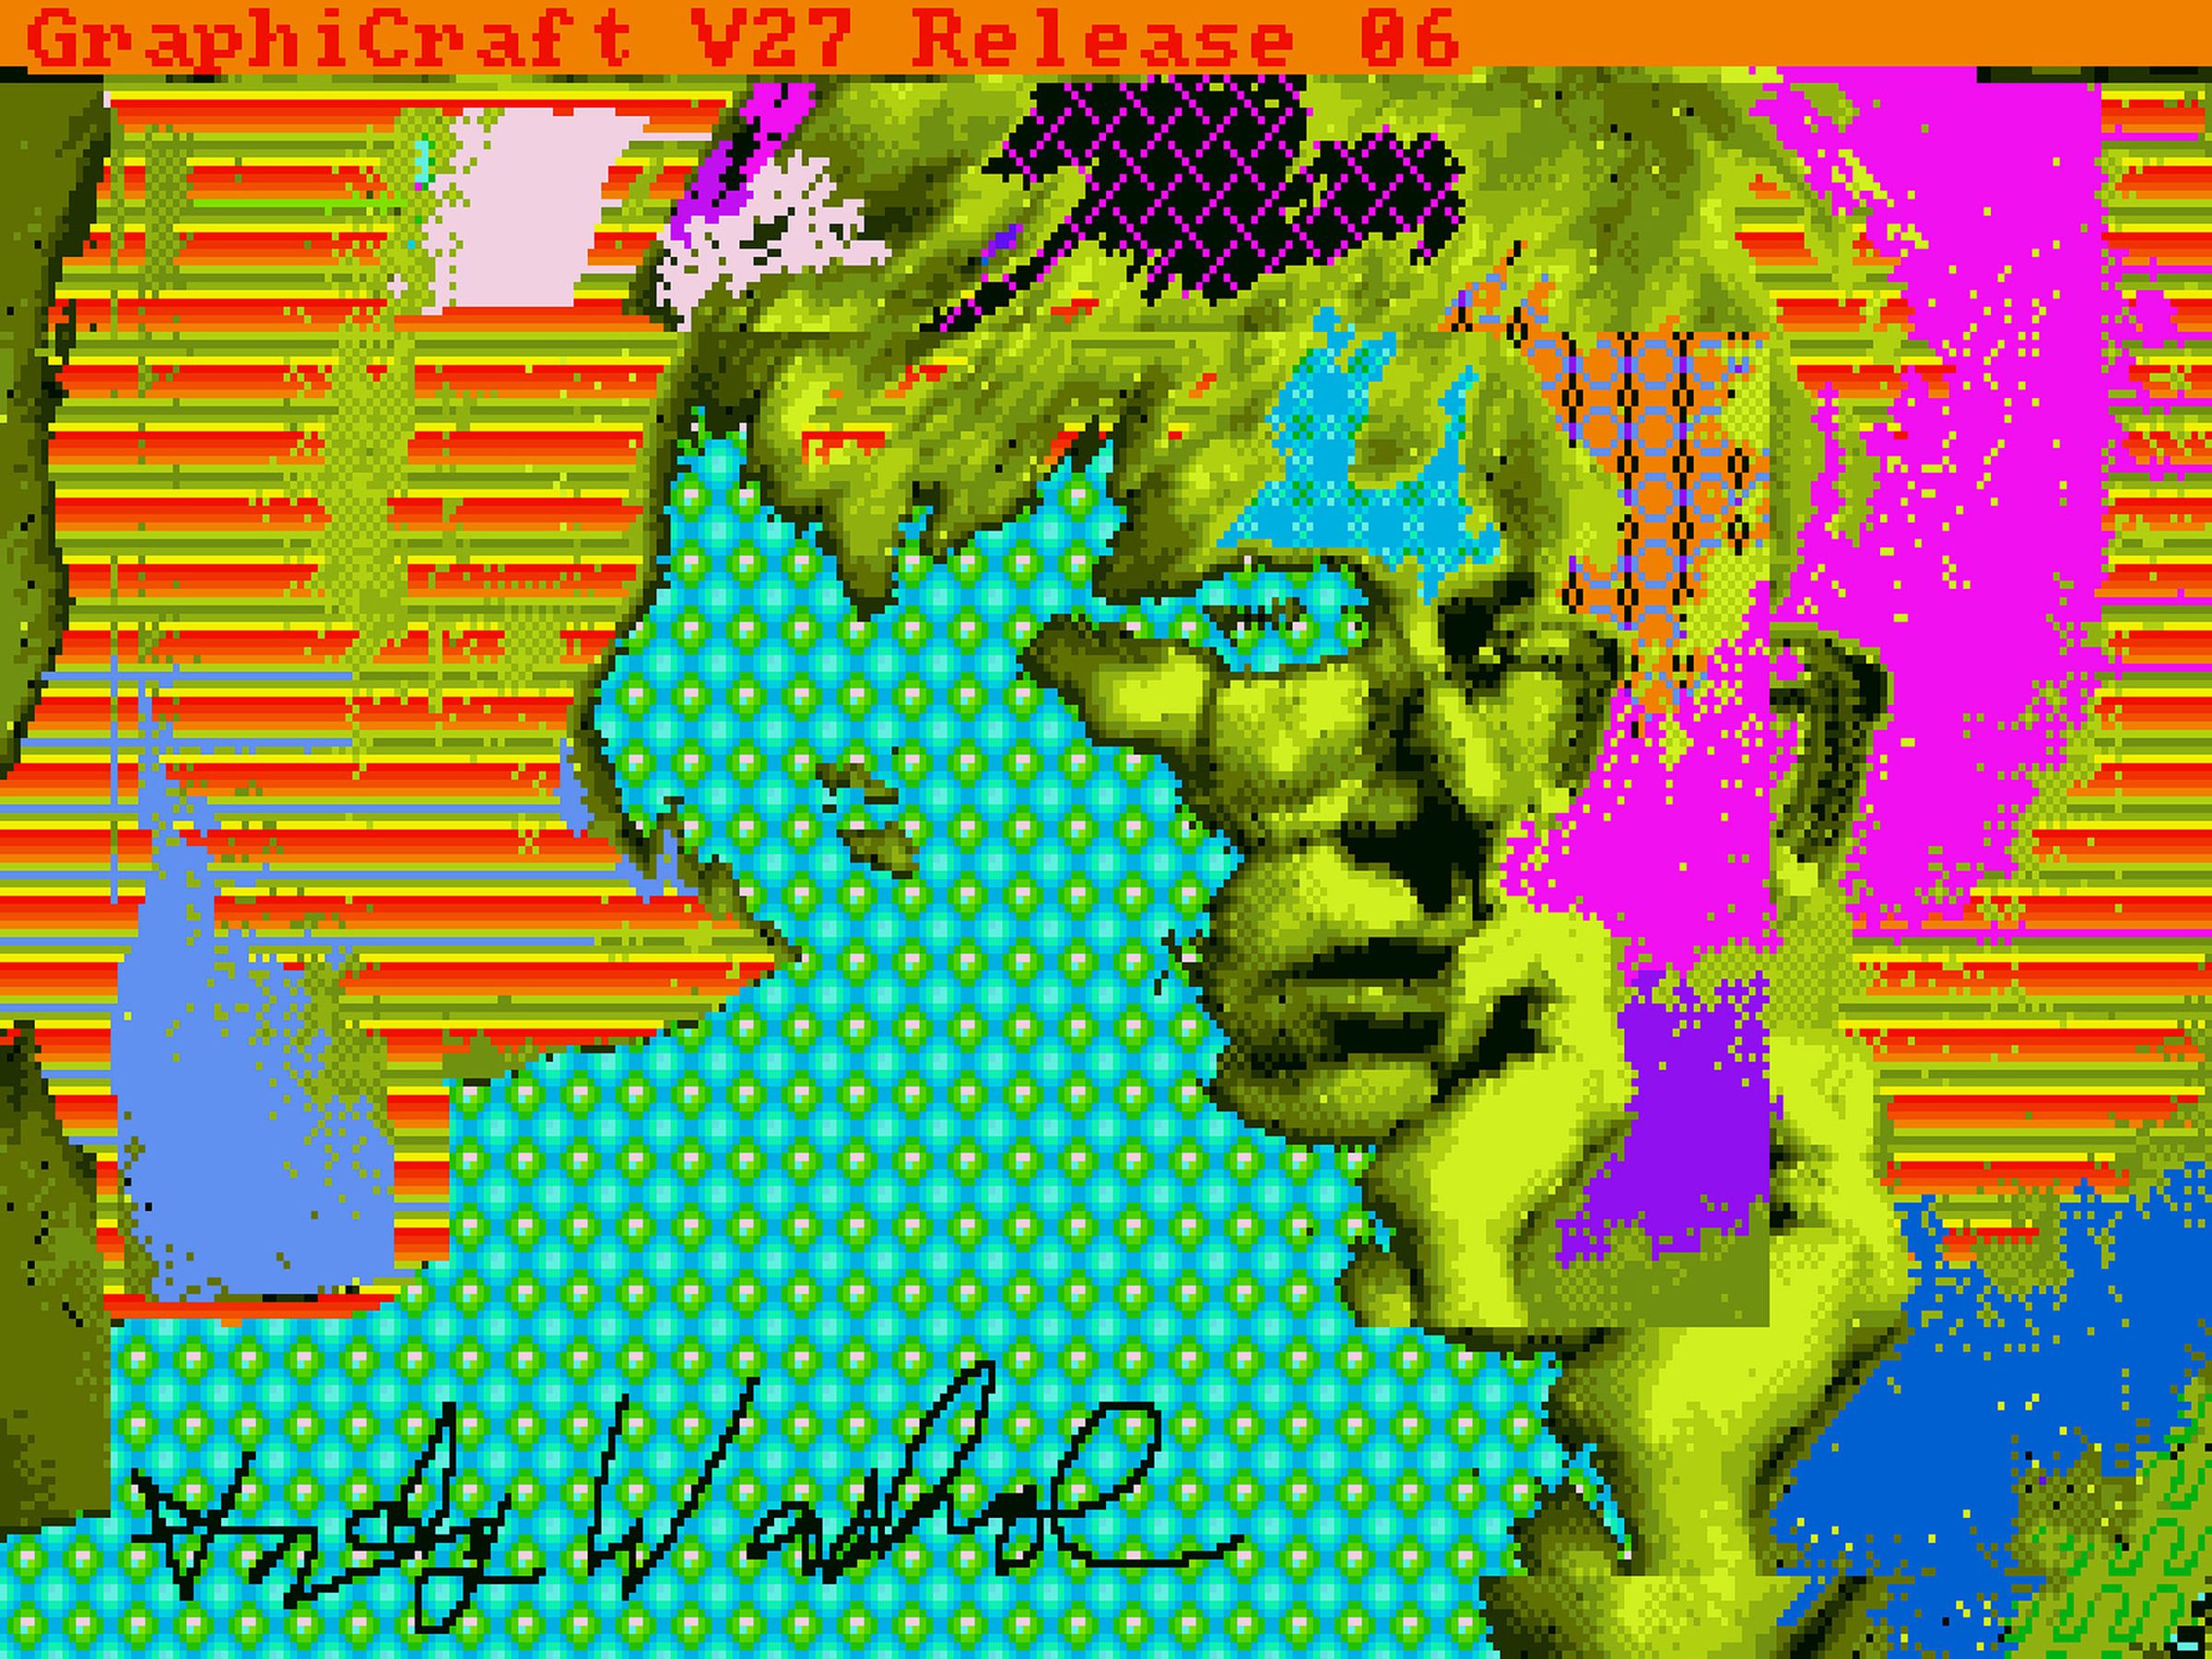 Gallery: Andy Warhol's Amiga art experiments